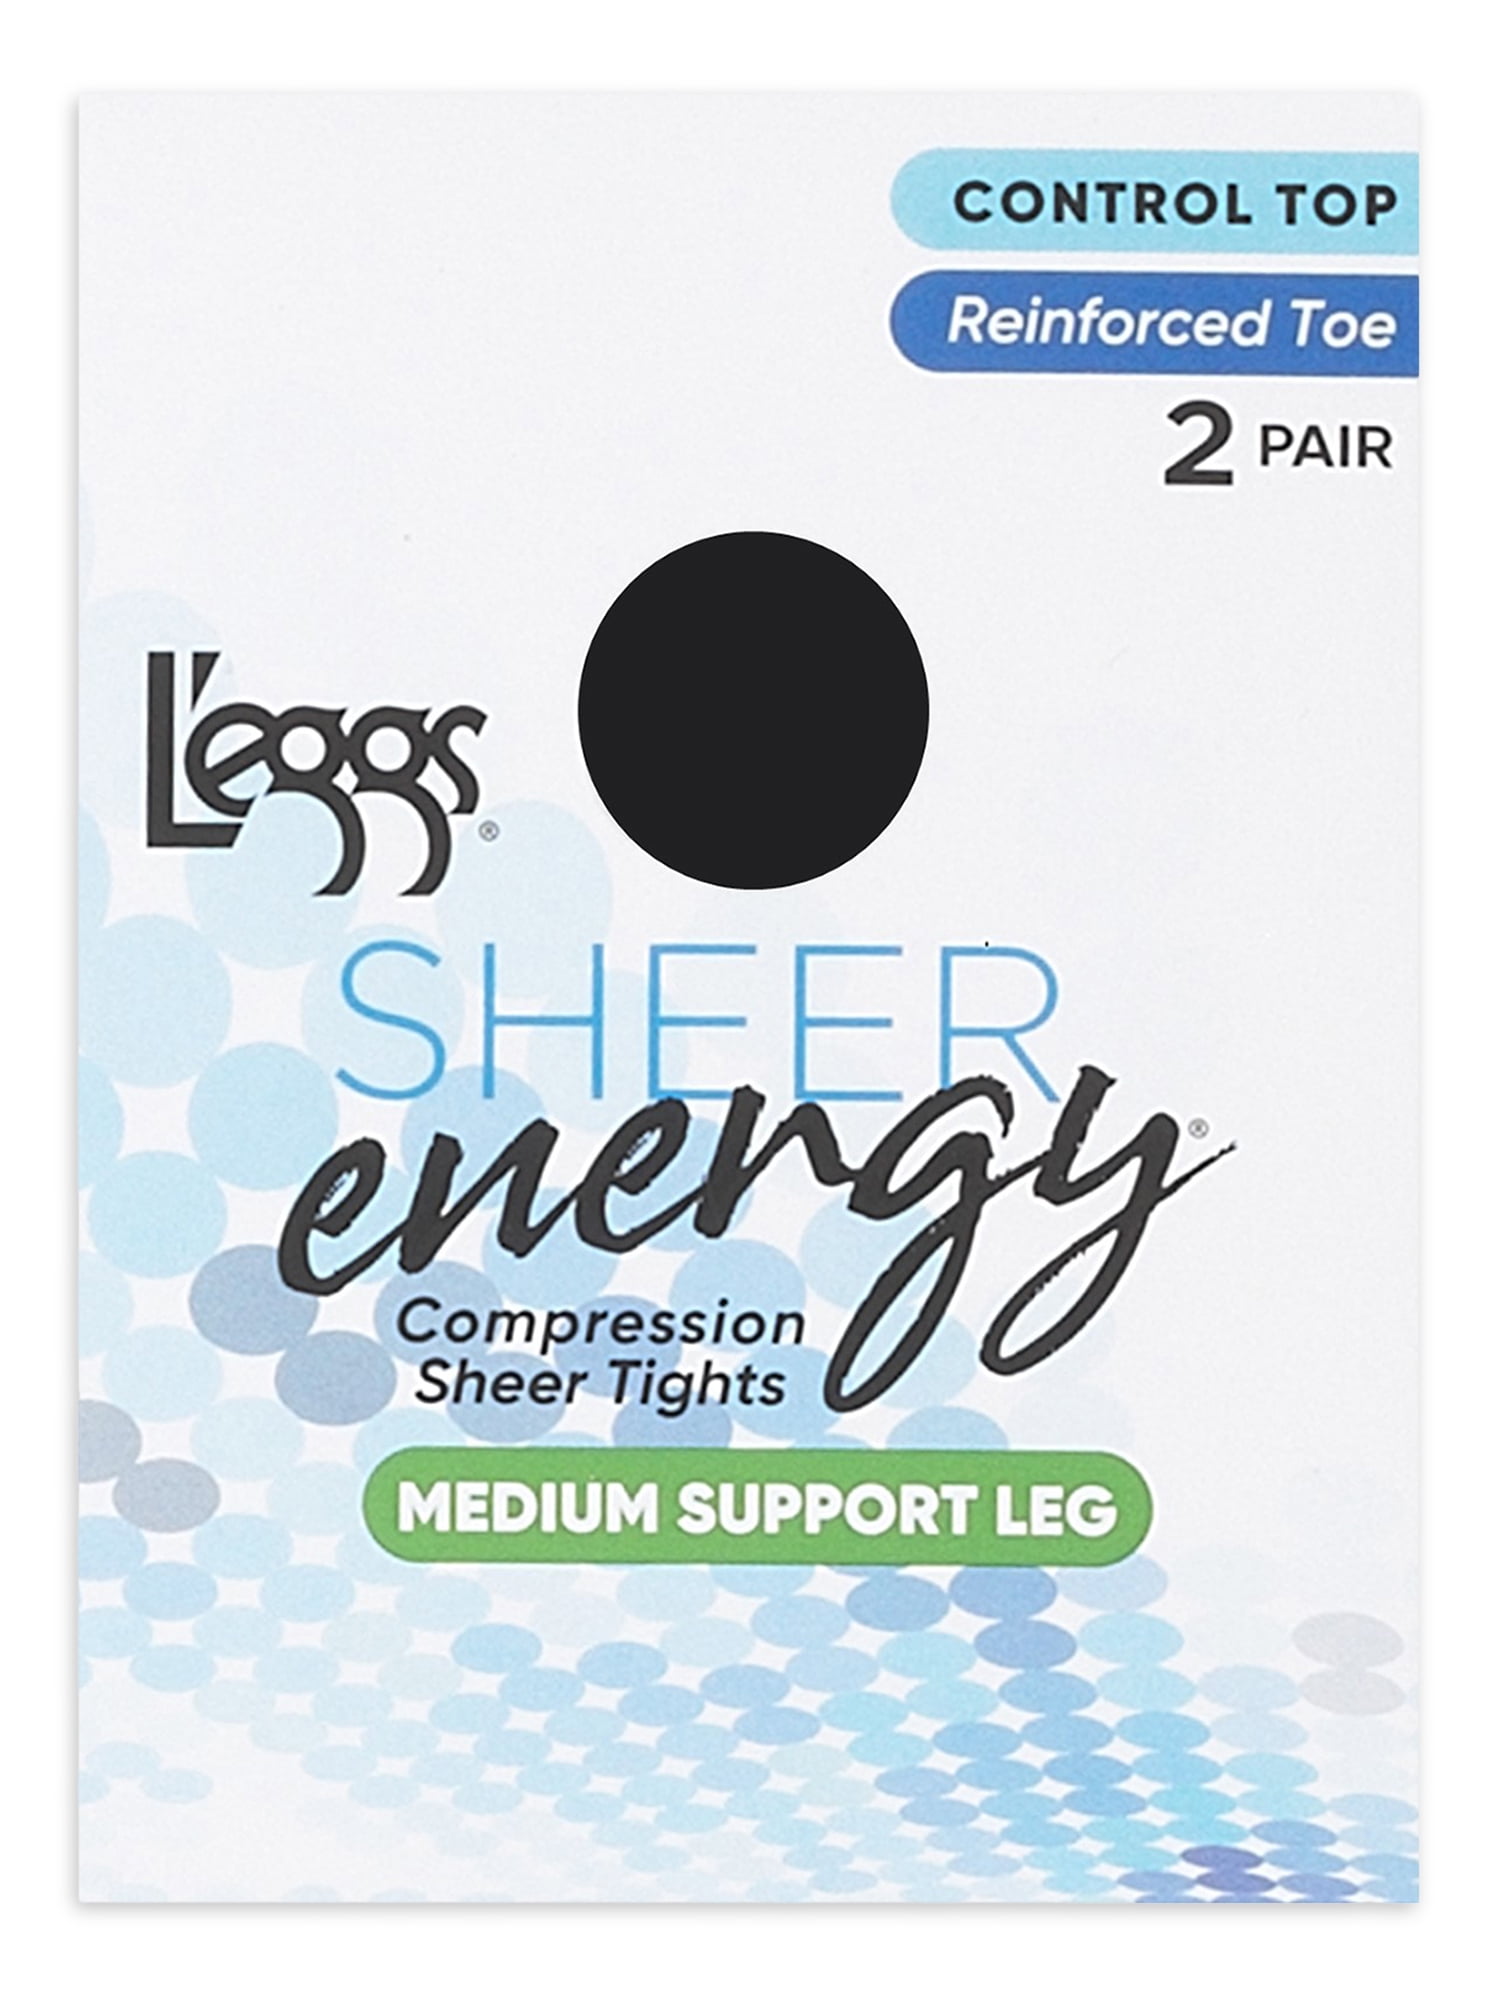 L'Eggs Sheer Energy Medium Support Leg Control Top Reinforced Toe, 2 Pack